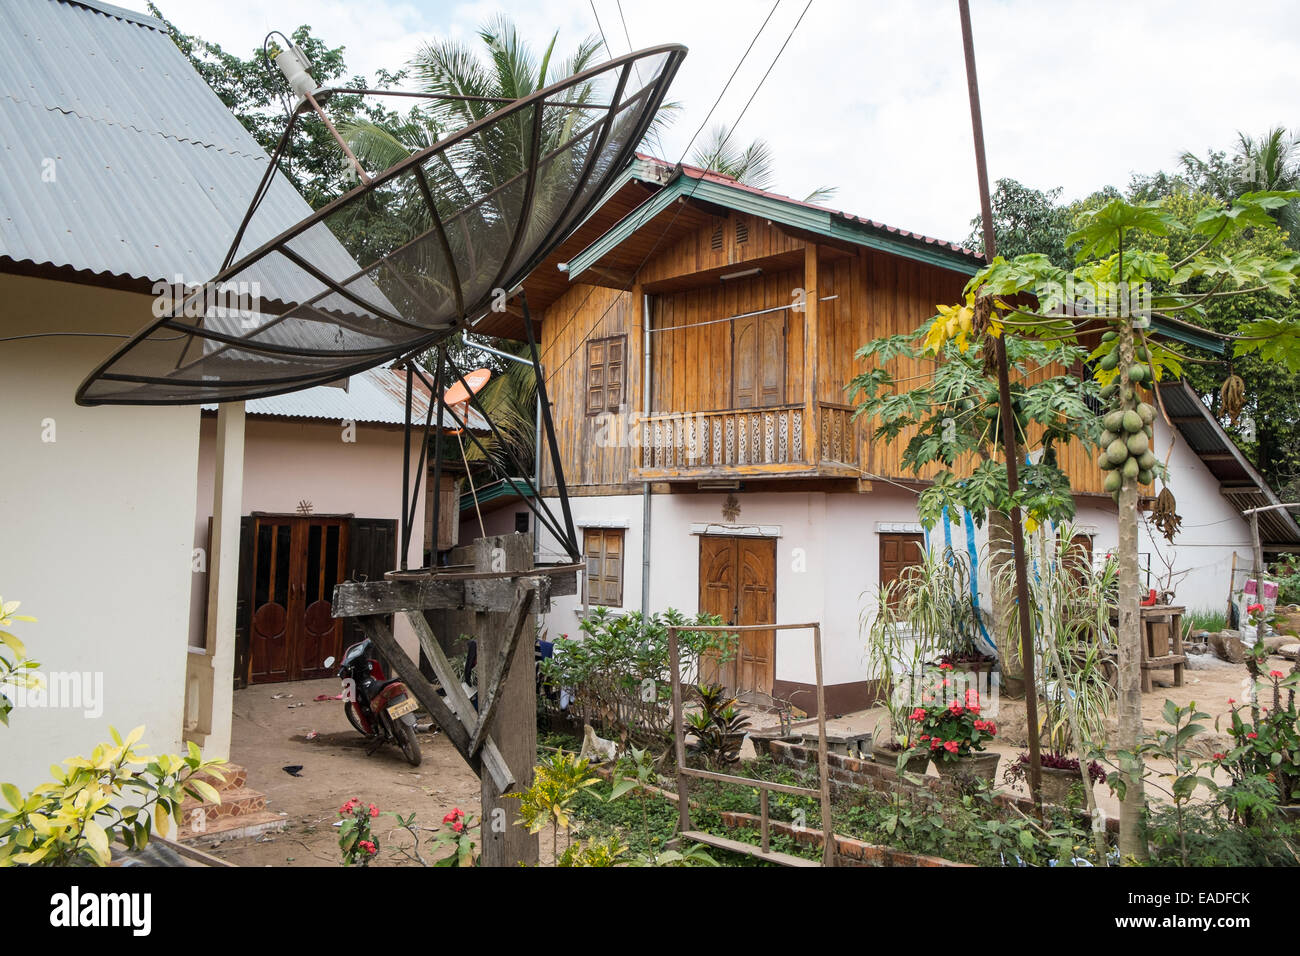 Enorme parabola satellitare fuori casa locale di Ban Xang Khong borgo a pochi chilometri da Luang Prabang, Laos, sud-est asiatico Foto Stock